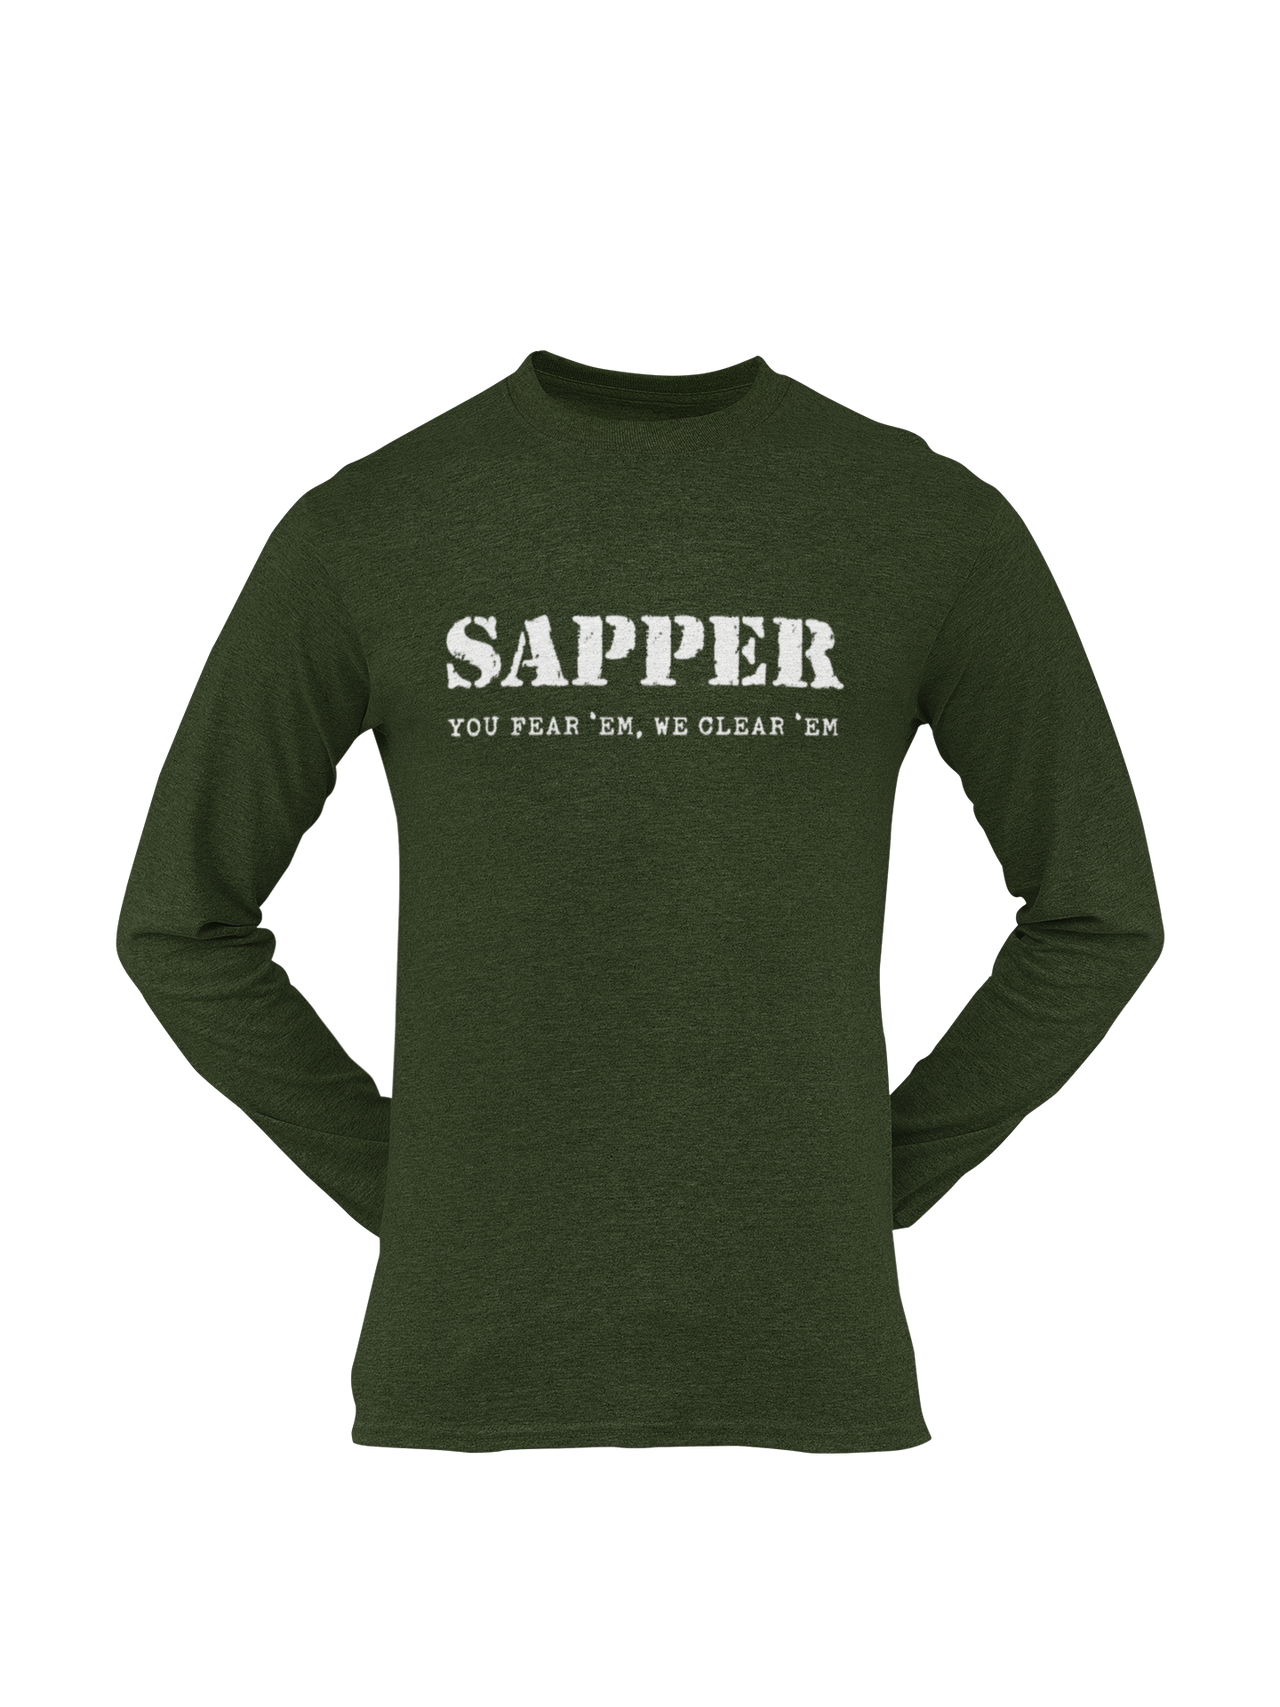 Sapper T-shirt - You Fear 'Em, We Clear 'Em (Men)